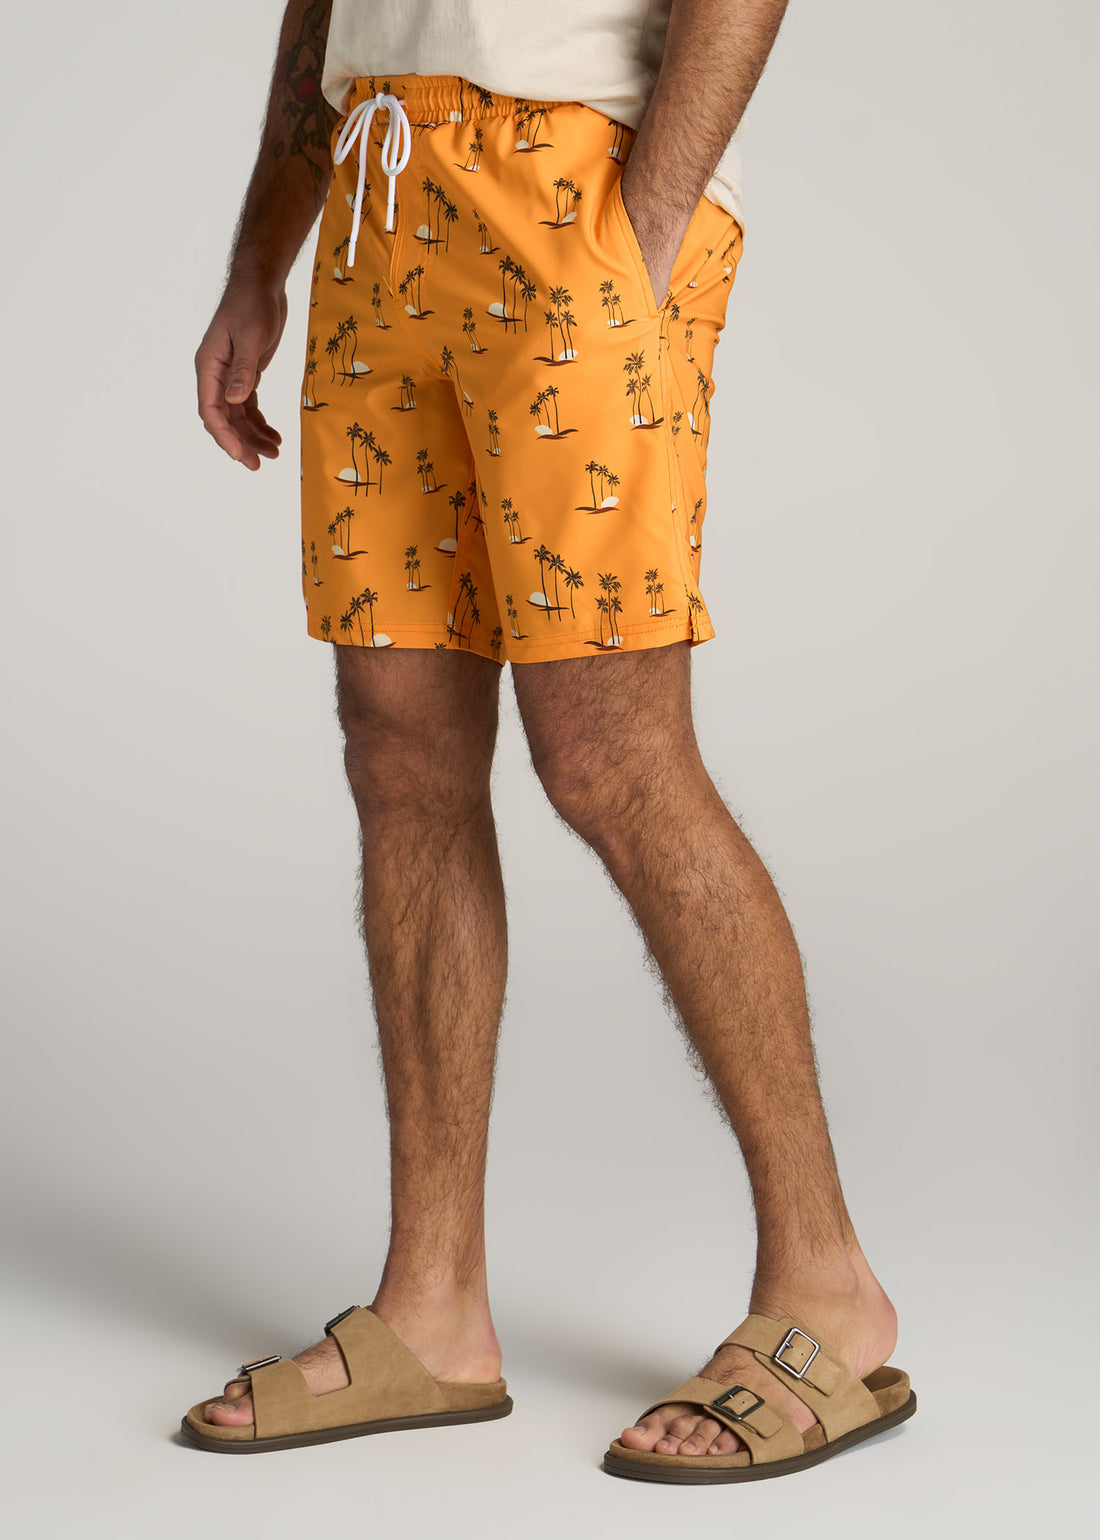 Tall man wearing orange swim shorts with an island pattern.